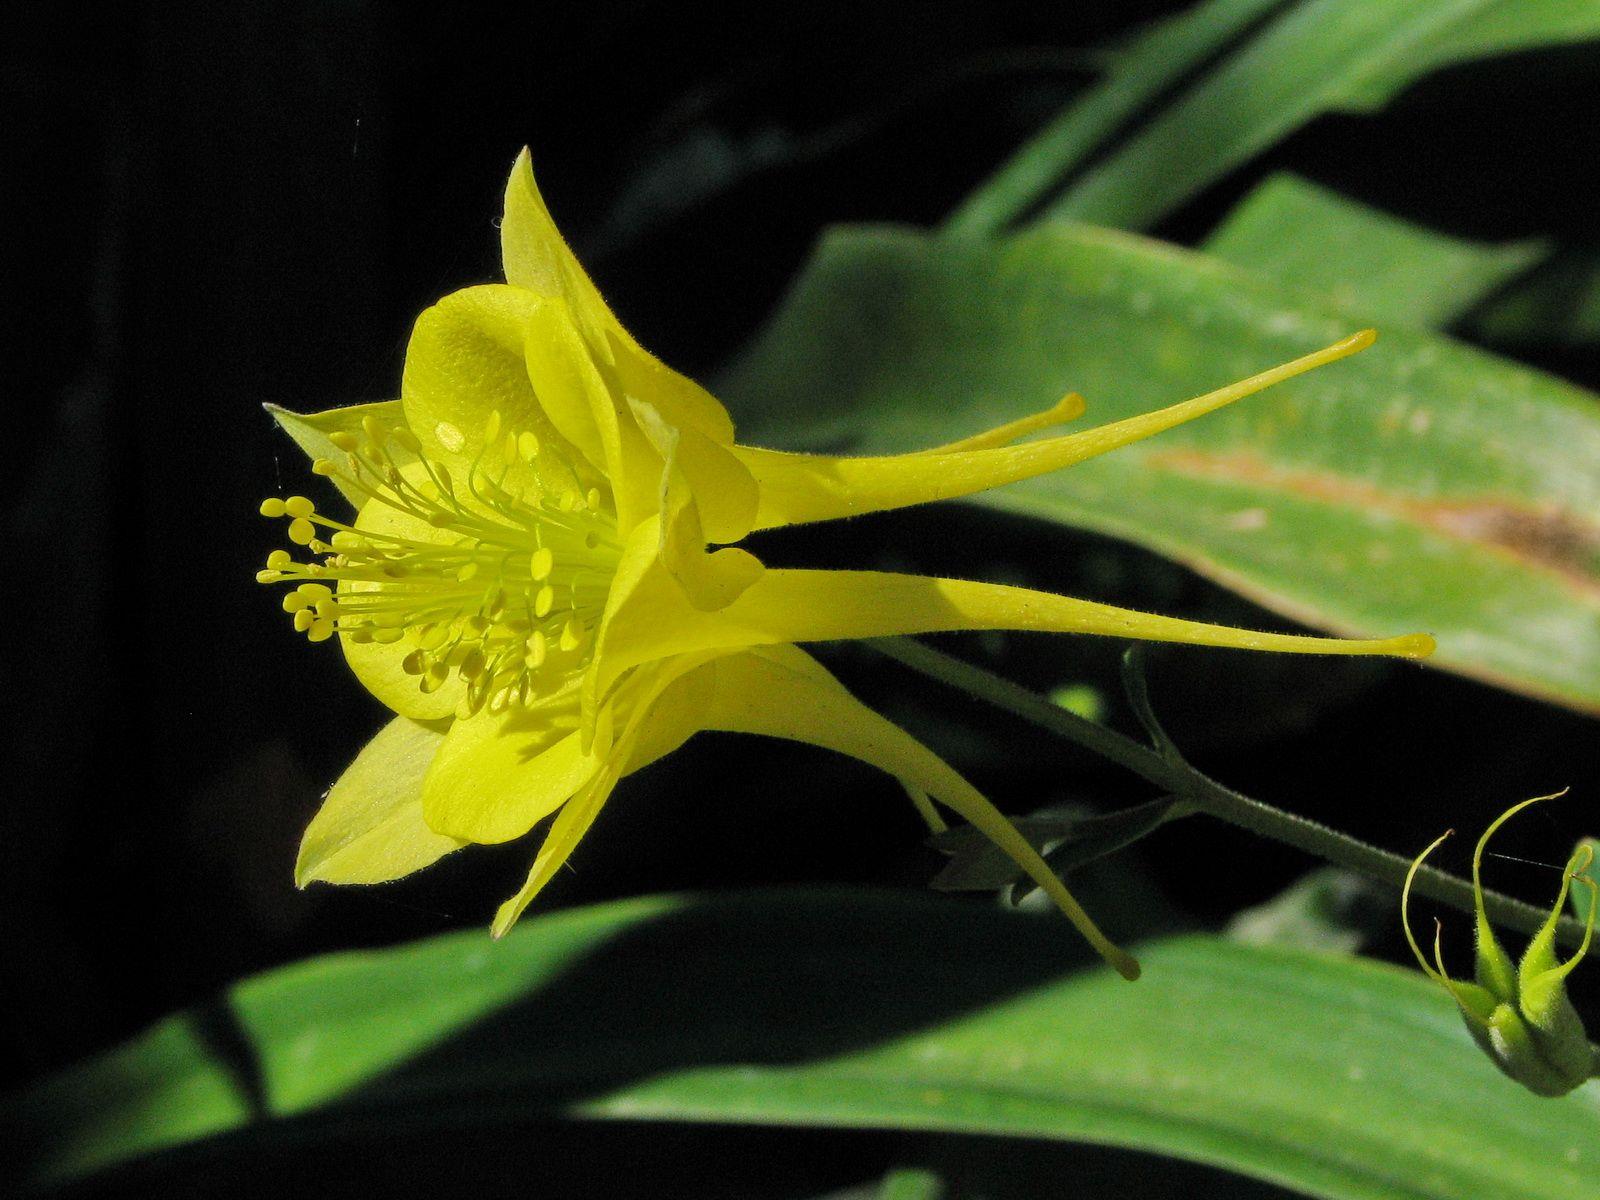 Aquilegia chrysantha 'Yellow Star' - Yellow Columbine, אקווילגה צהובה, אקווילגה צהובה